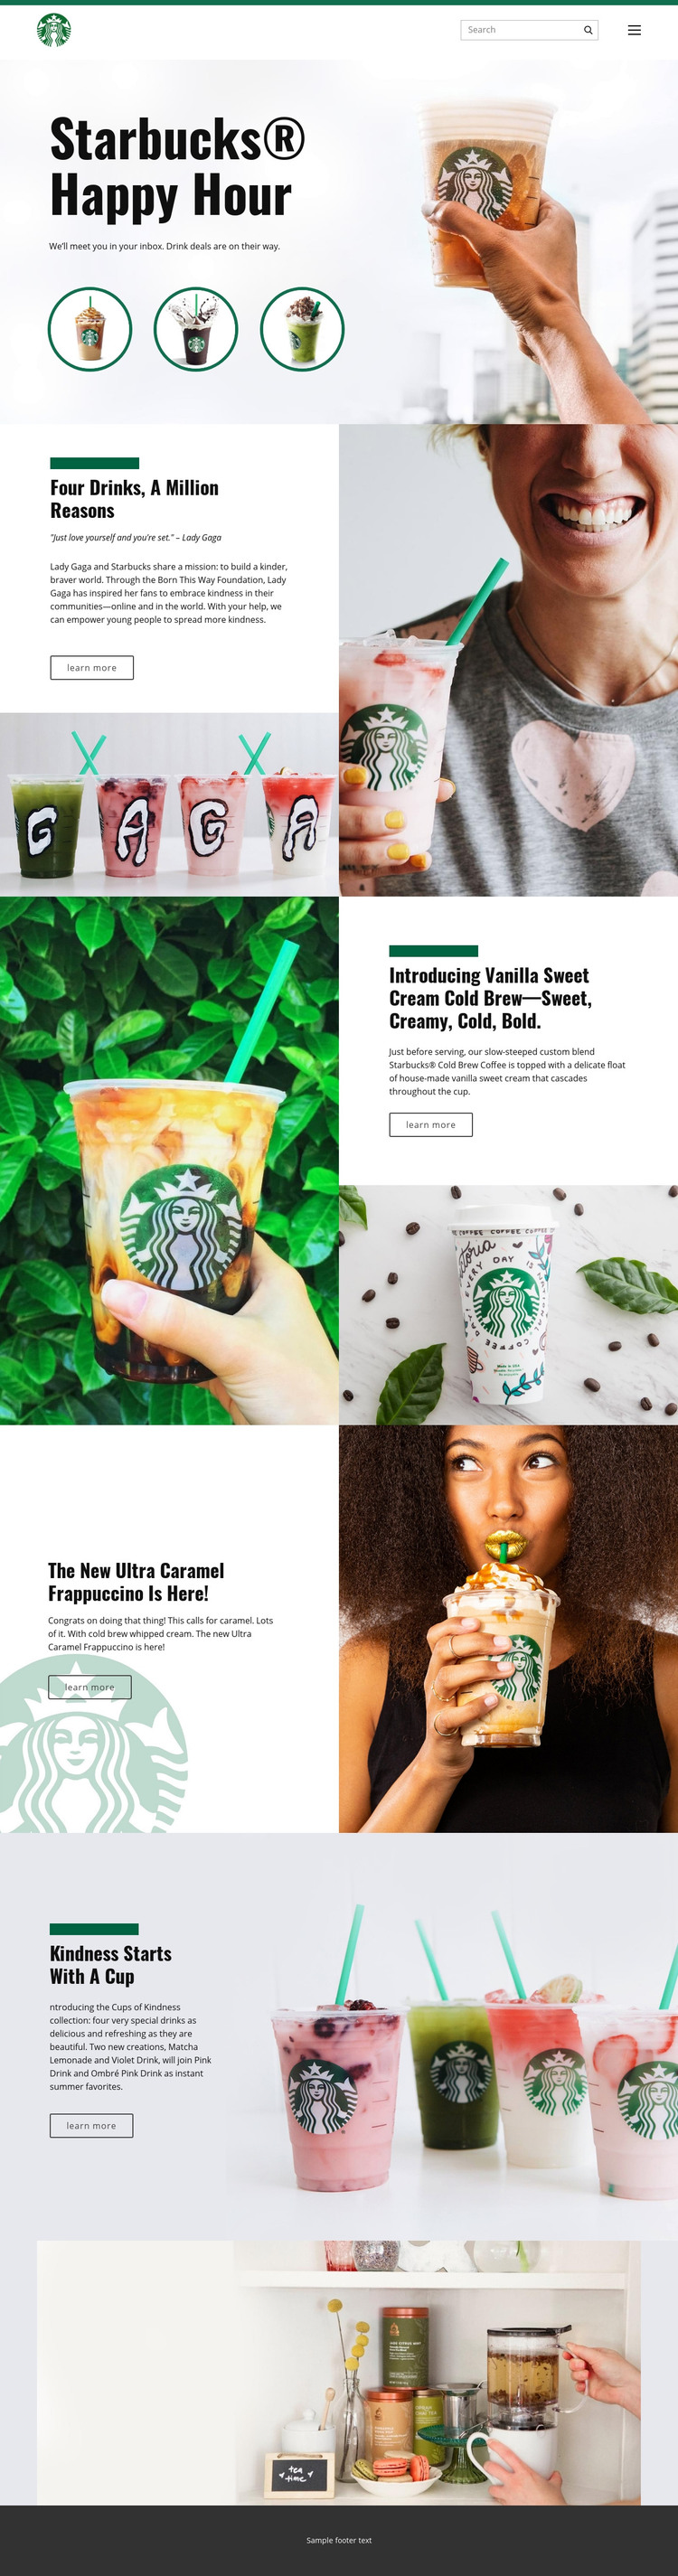 Starbucks Coffee Homepage Design